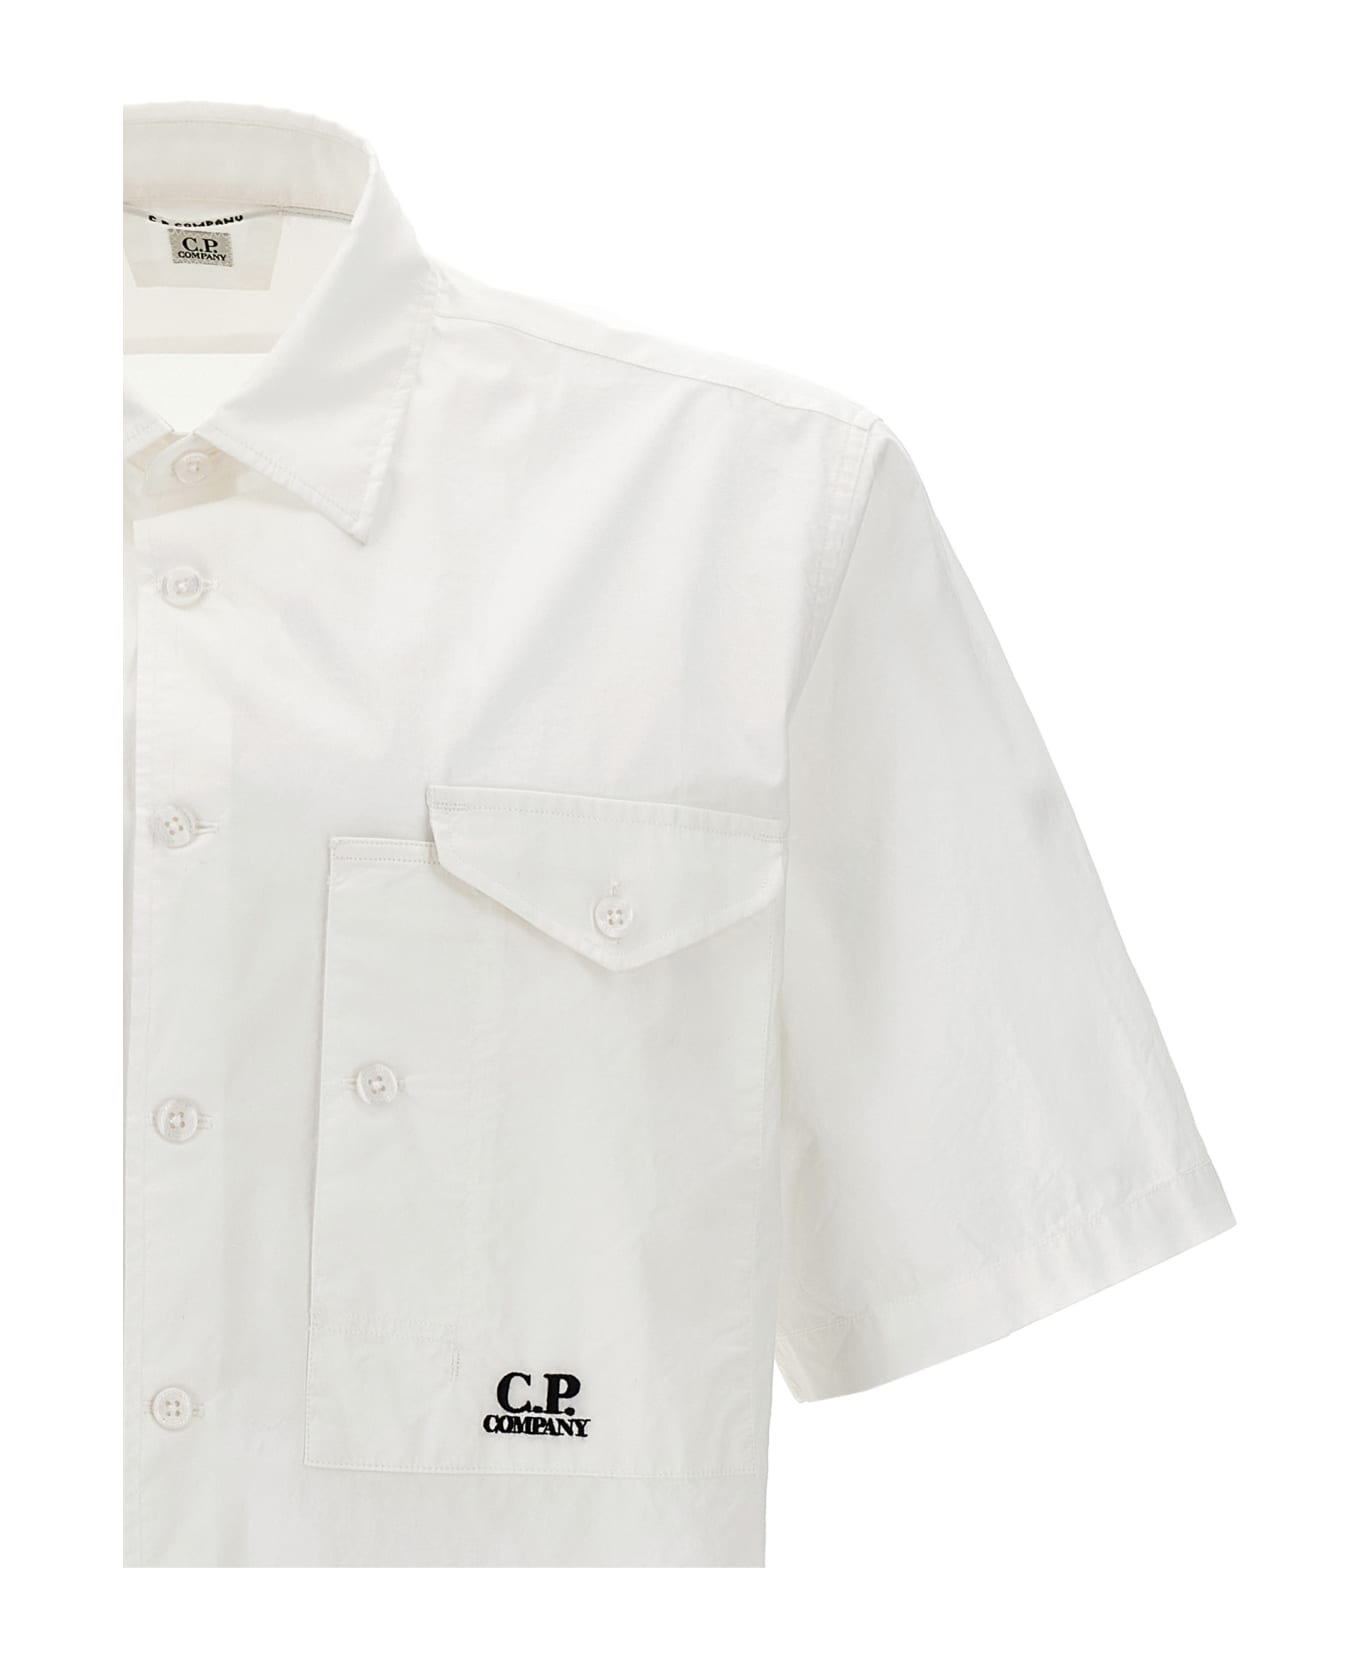 C.P. Company Logo Embroidery Shirt - White